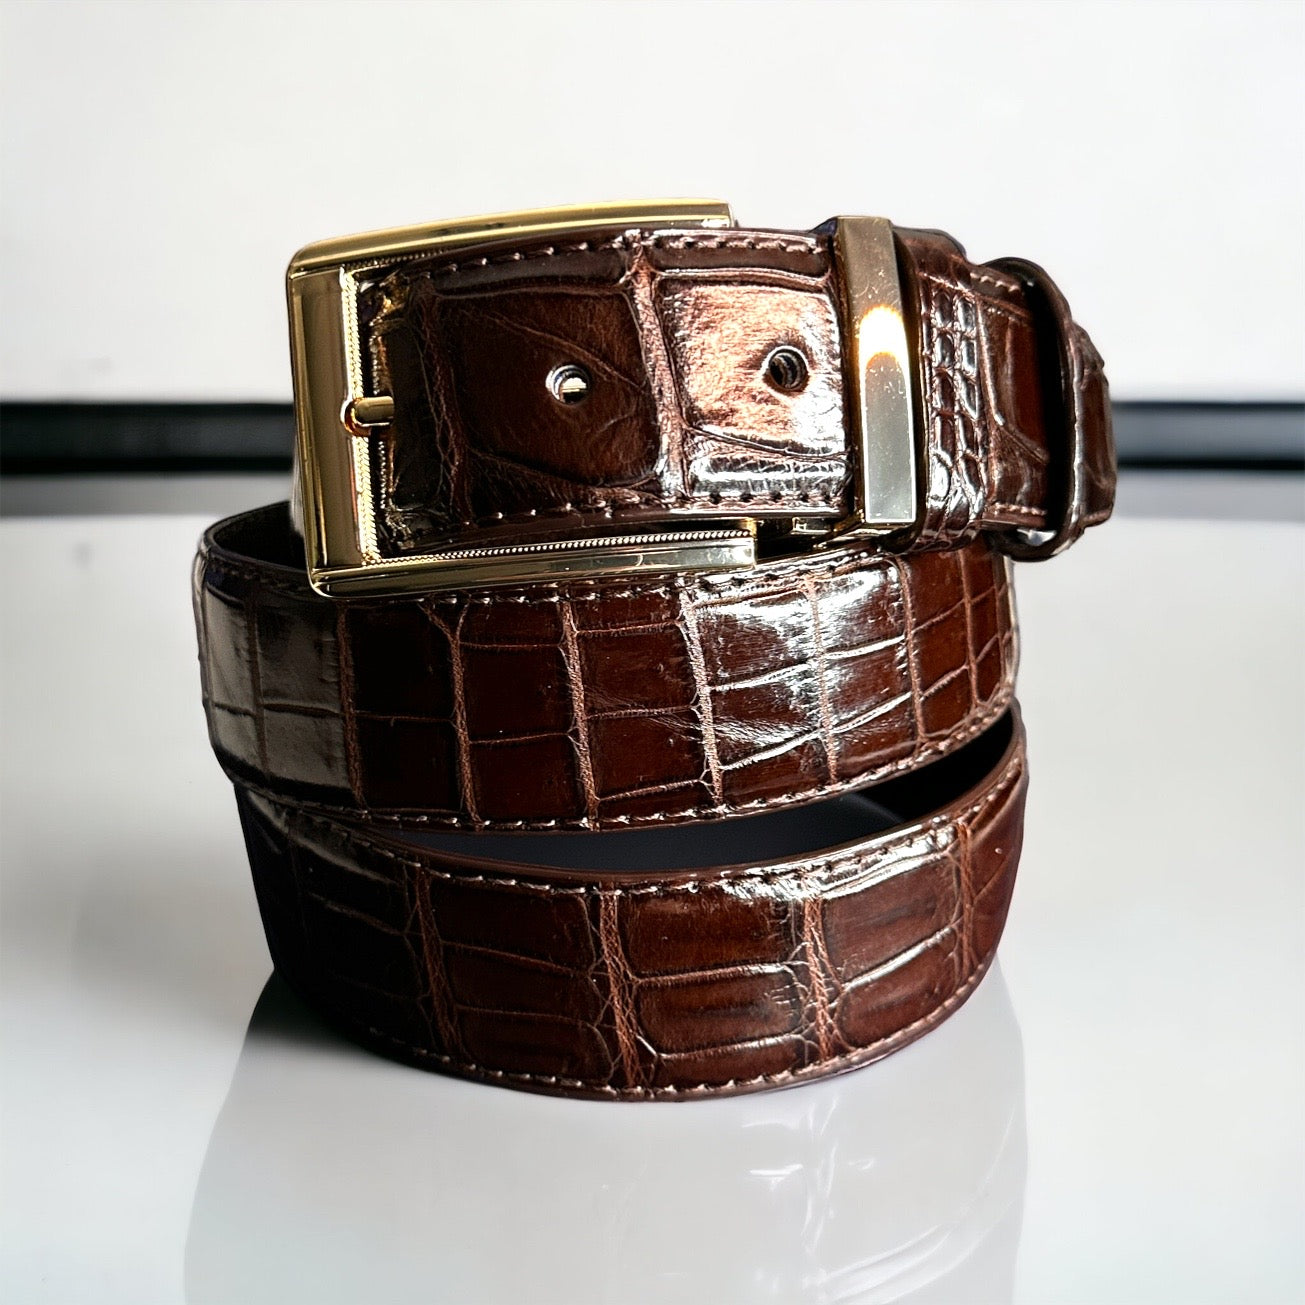 Men's Belts  Mens belts, Leather belts men, Crocodile leather belt